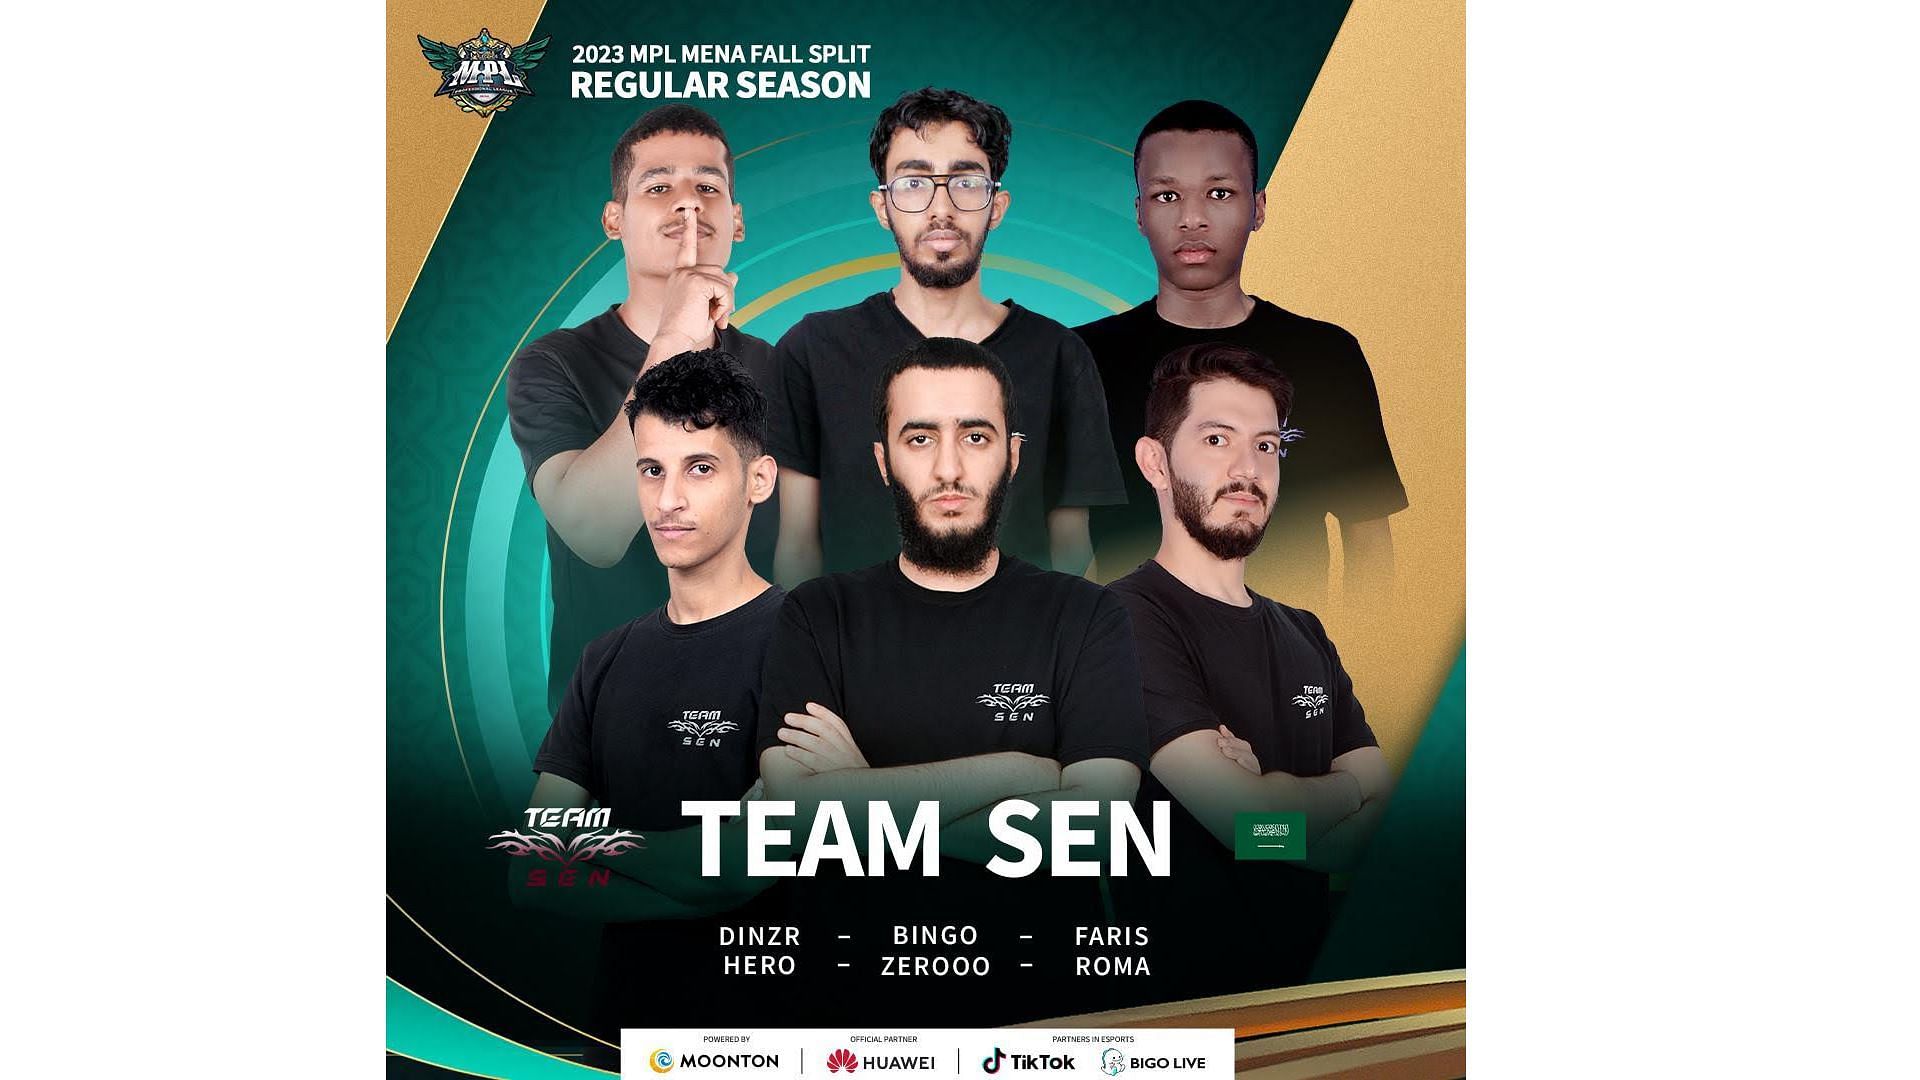 Team SEN will go all in to go all the way this MPL MENA Fall Split season (Image via Moonton Games)